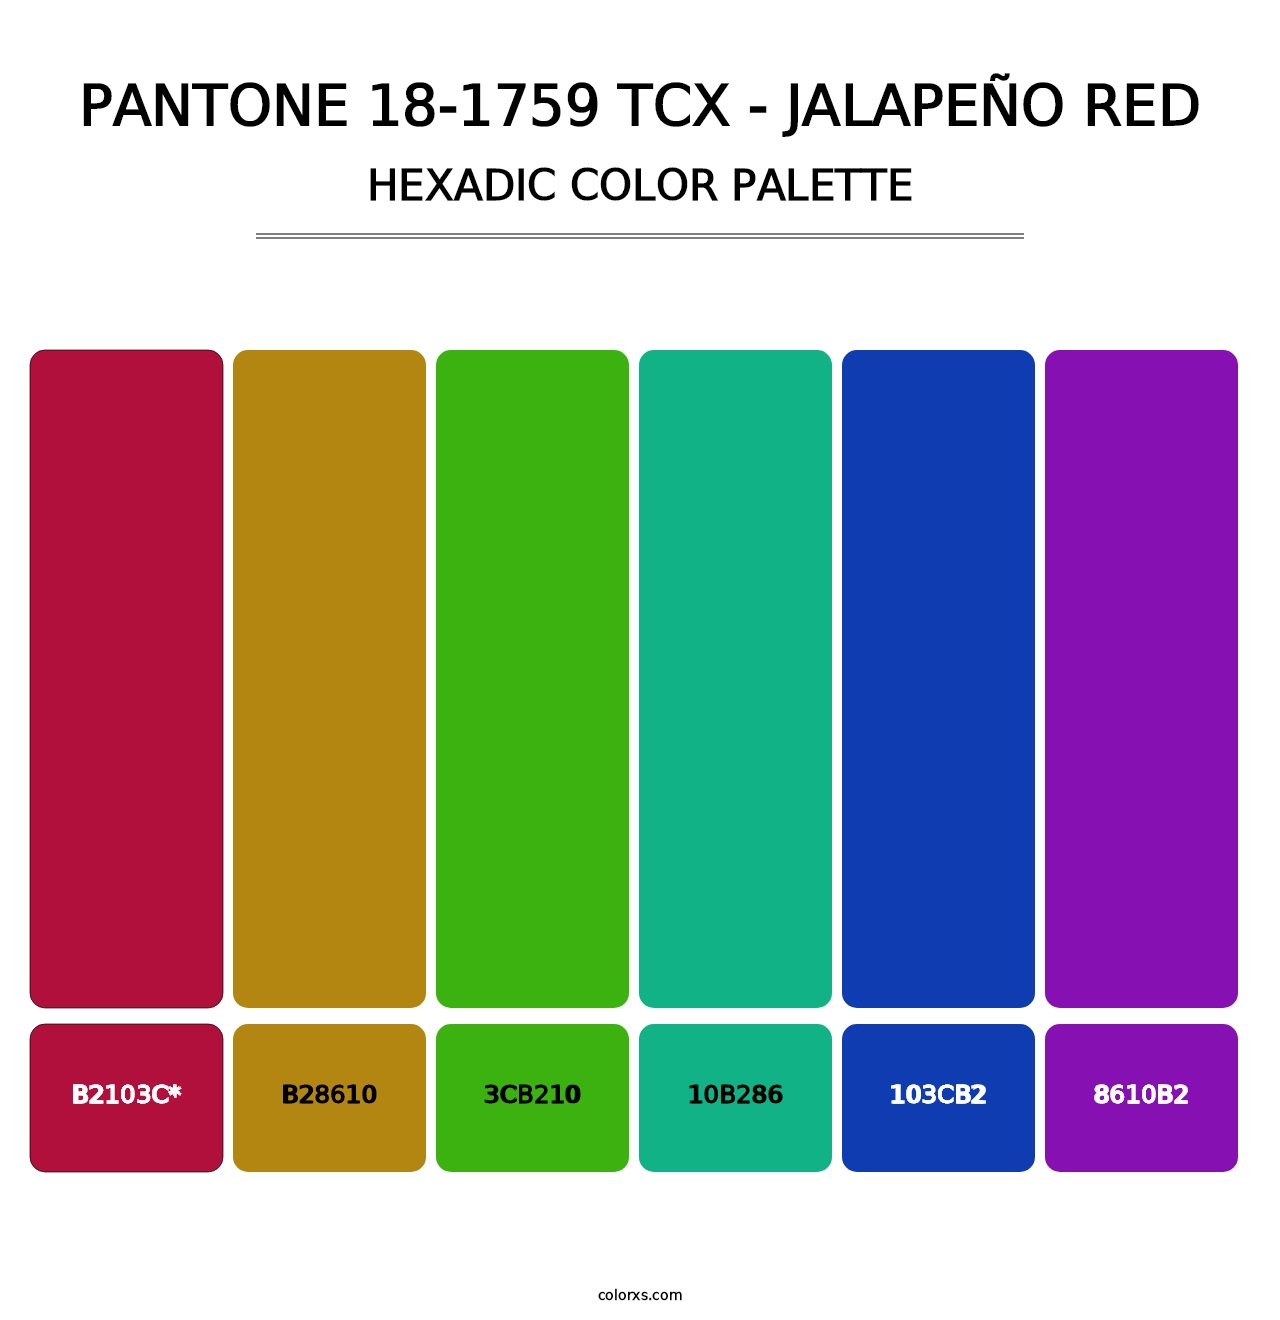 PANTONE 18-1759 TCX - Jalapeño Red - Hexadic Color Palette